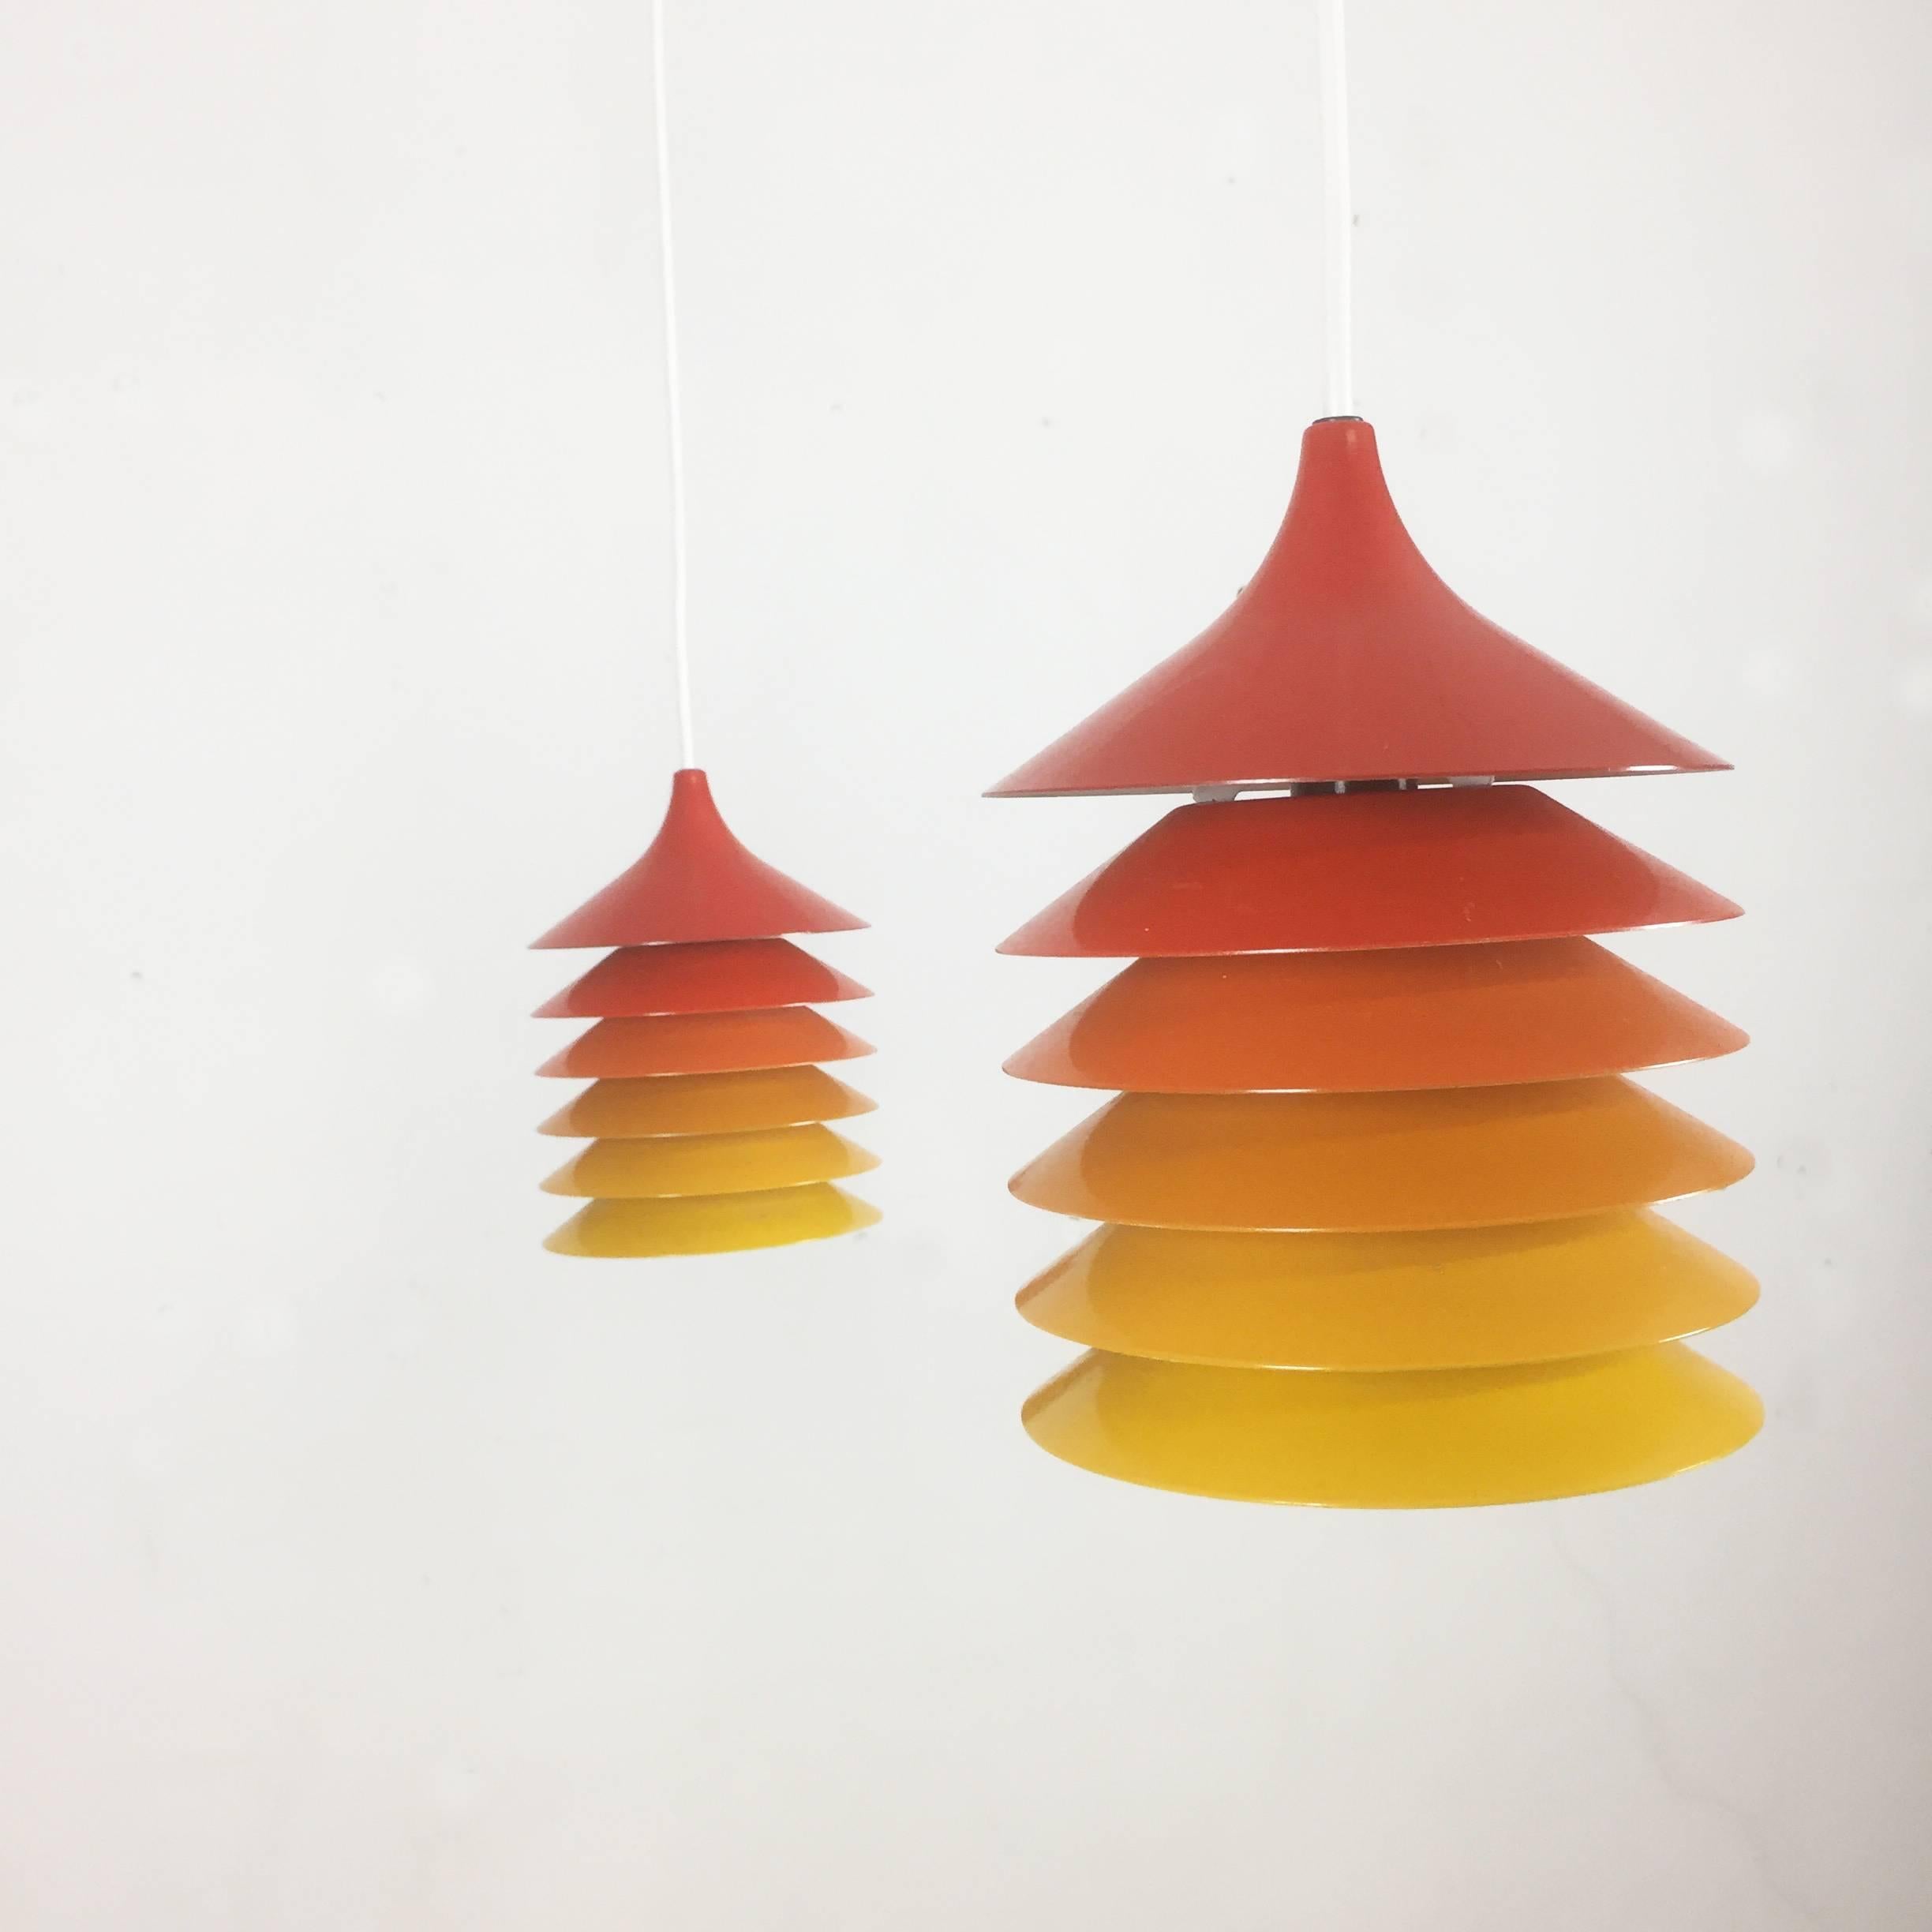 Article:

Set of three hanging lights


Model: Duett in red-yellow


Producer:

IKEA, Sweden


Design:

Bent Gantzel-Boysen



Age:

1970s




Description:

Set of three original 1970s hanging light designed by Bent